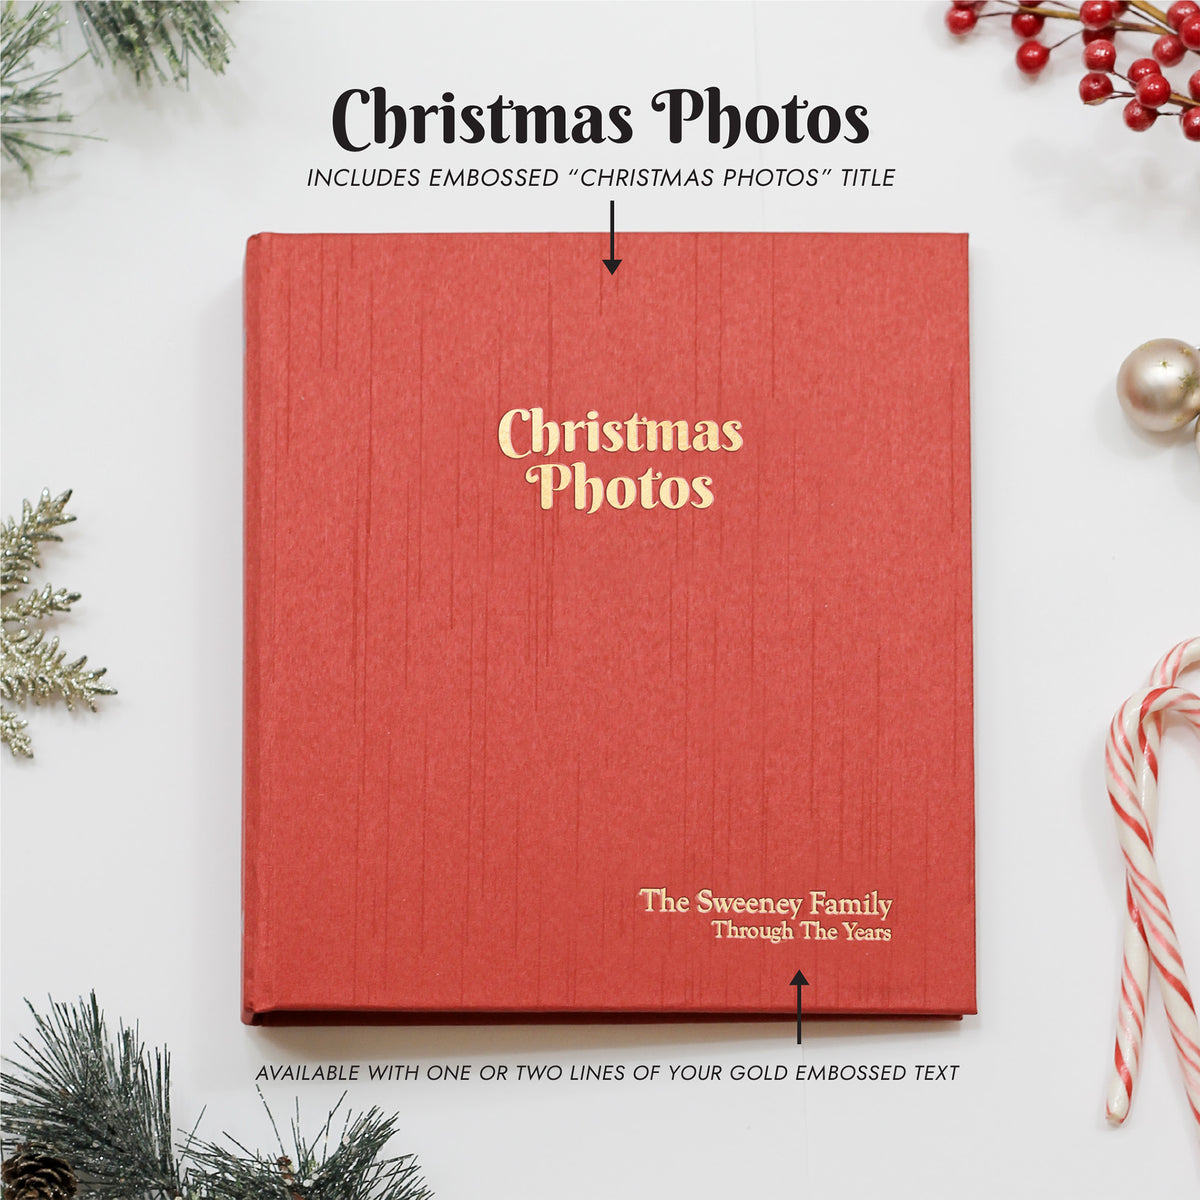 Medium Christmas Photo Binder with Garnet Silk Cover for 4x6 Photos